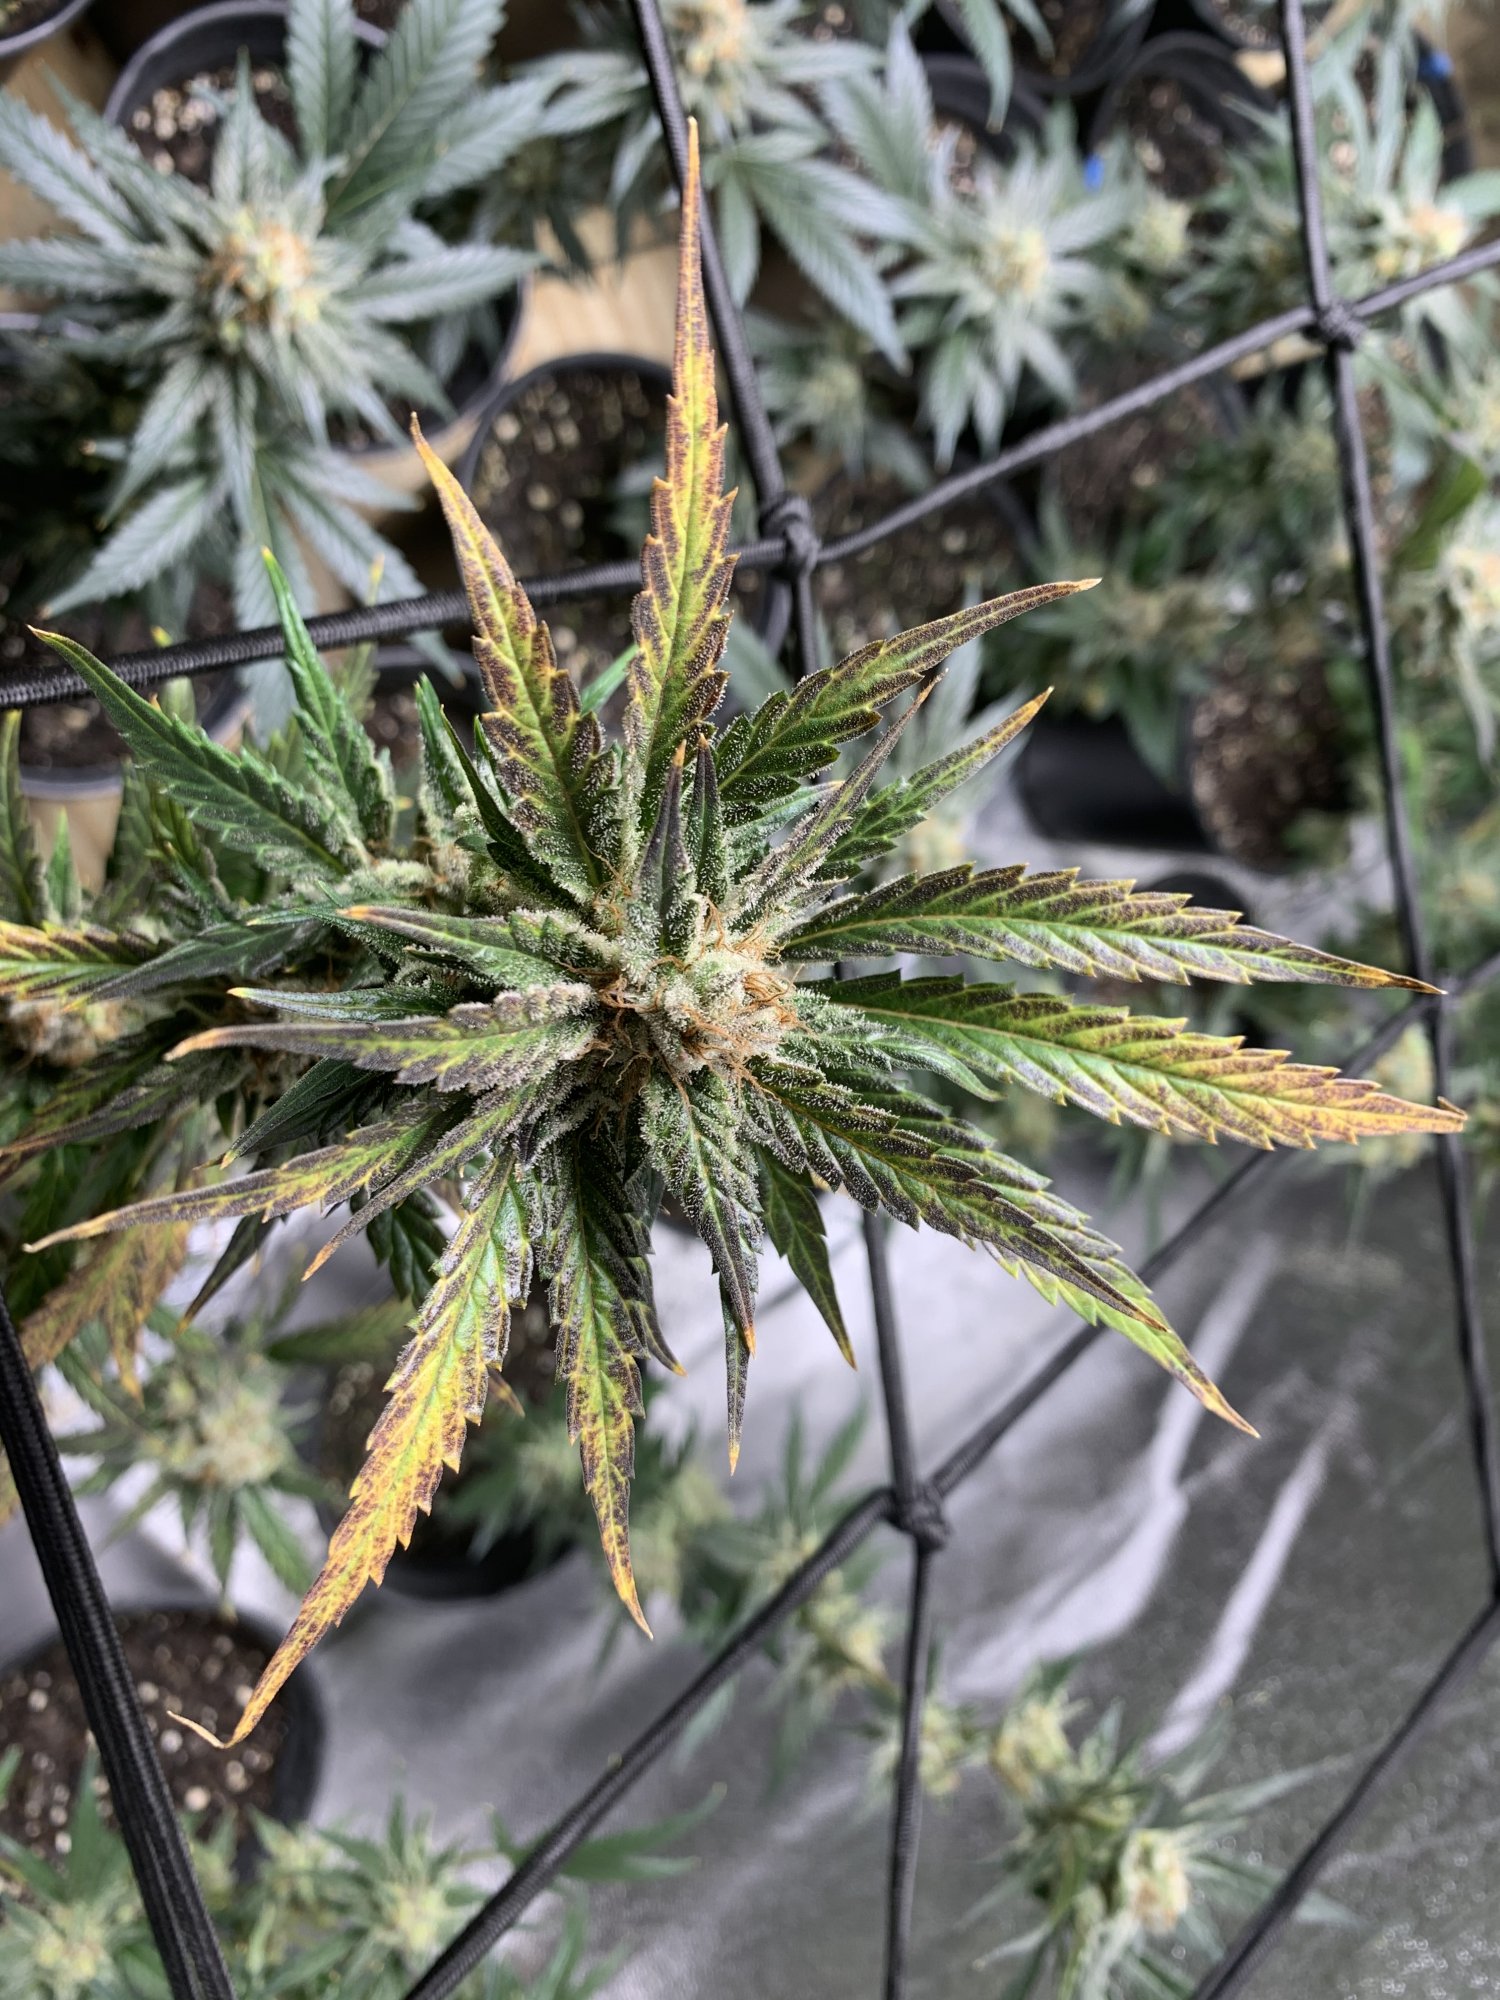 Purple people eating cannabis leaves